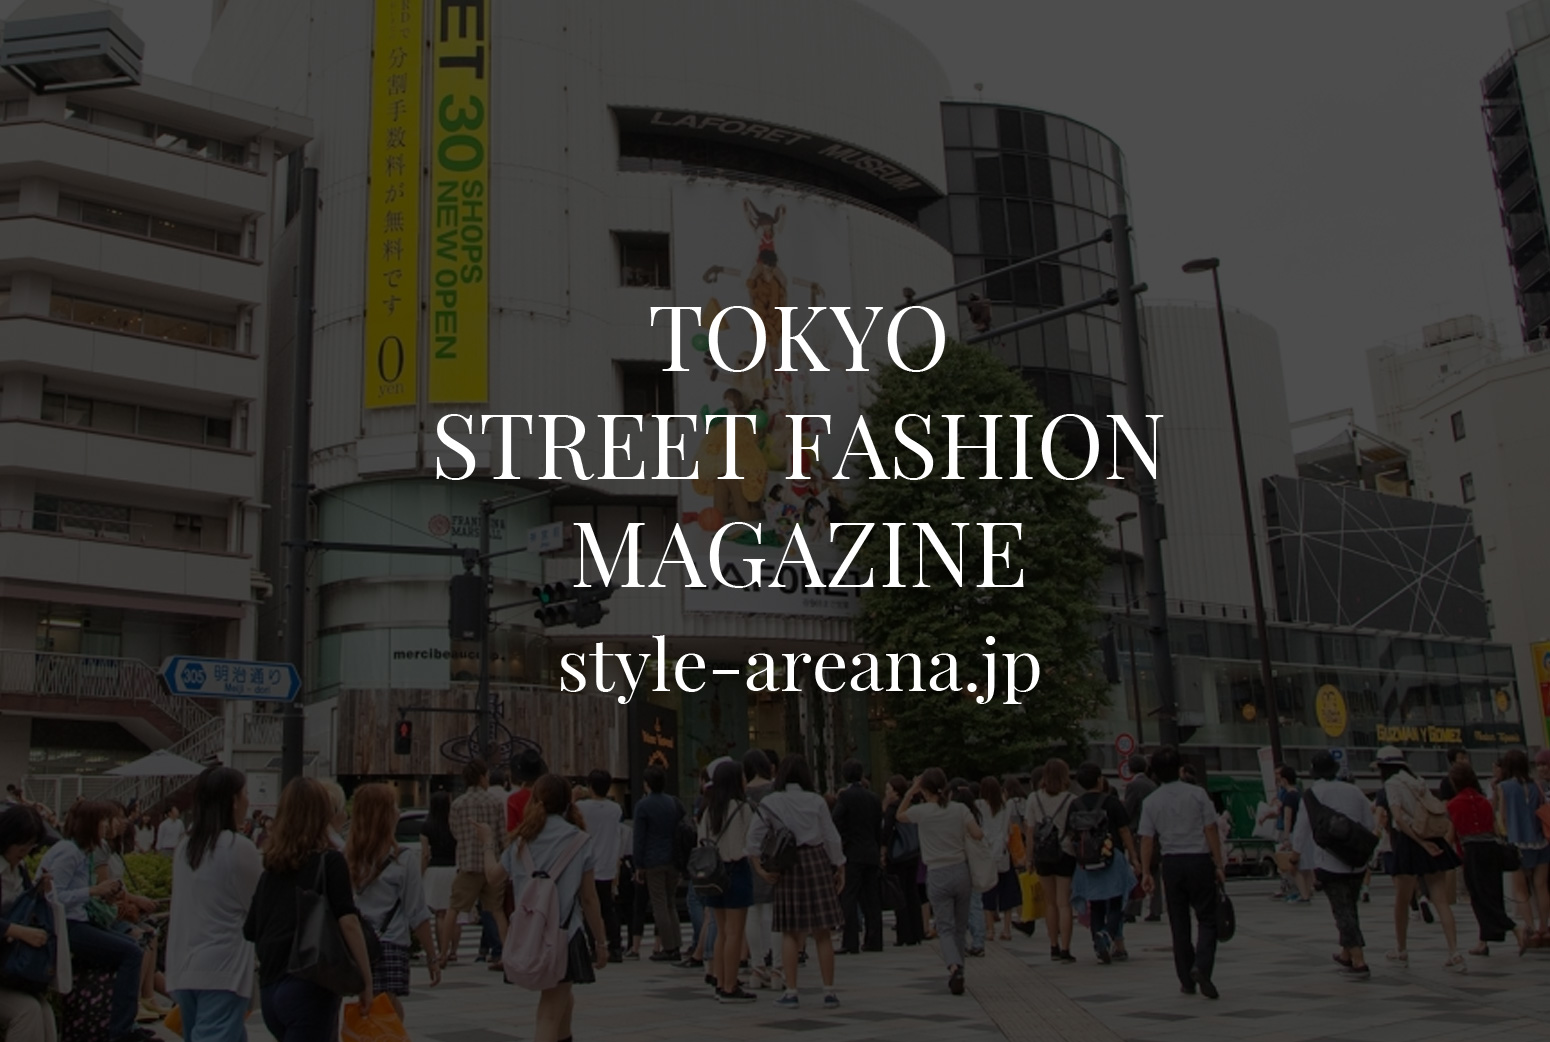 TOKYO STREET FASHION MAGAZINE style-arena.jp